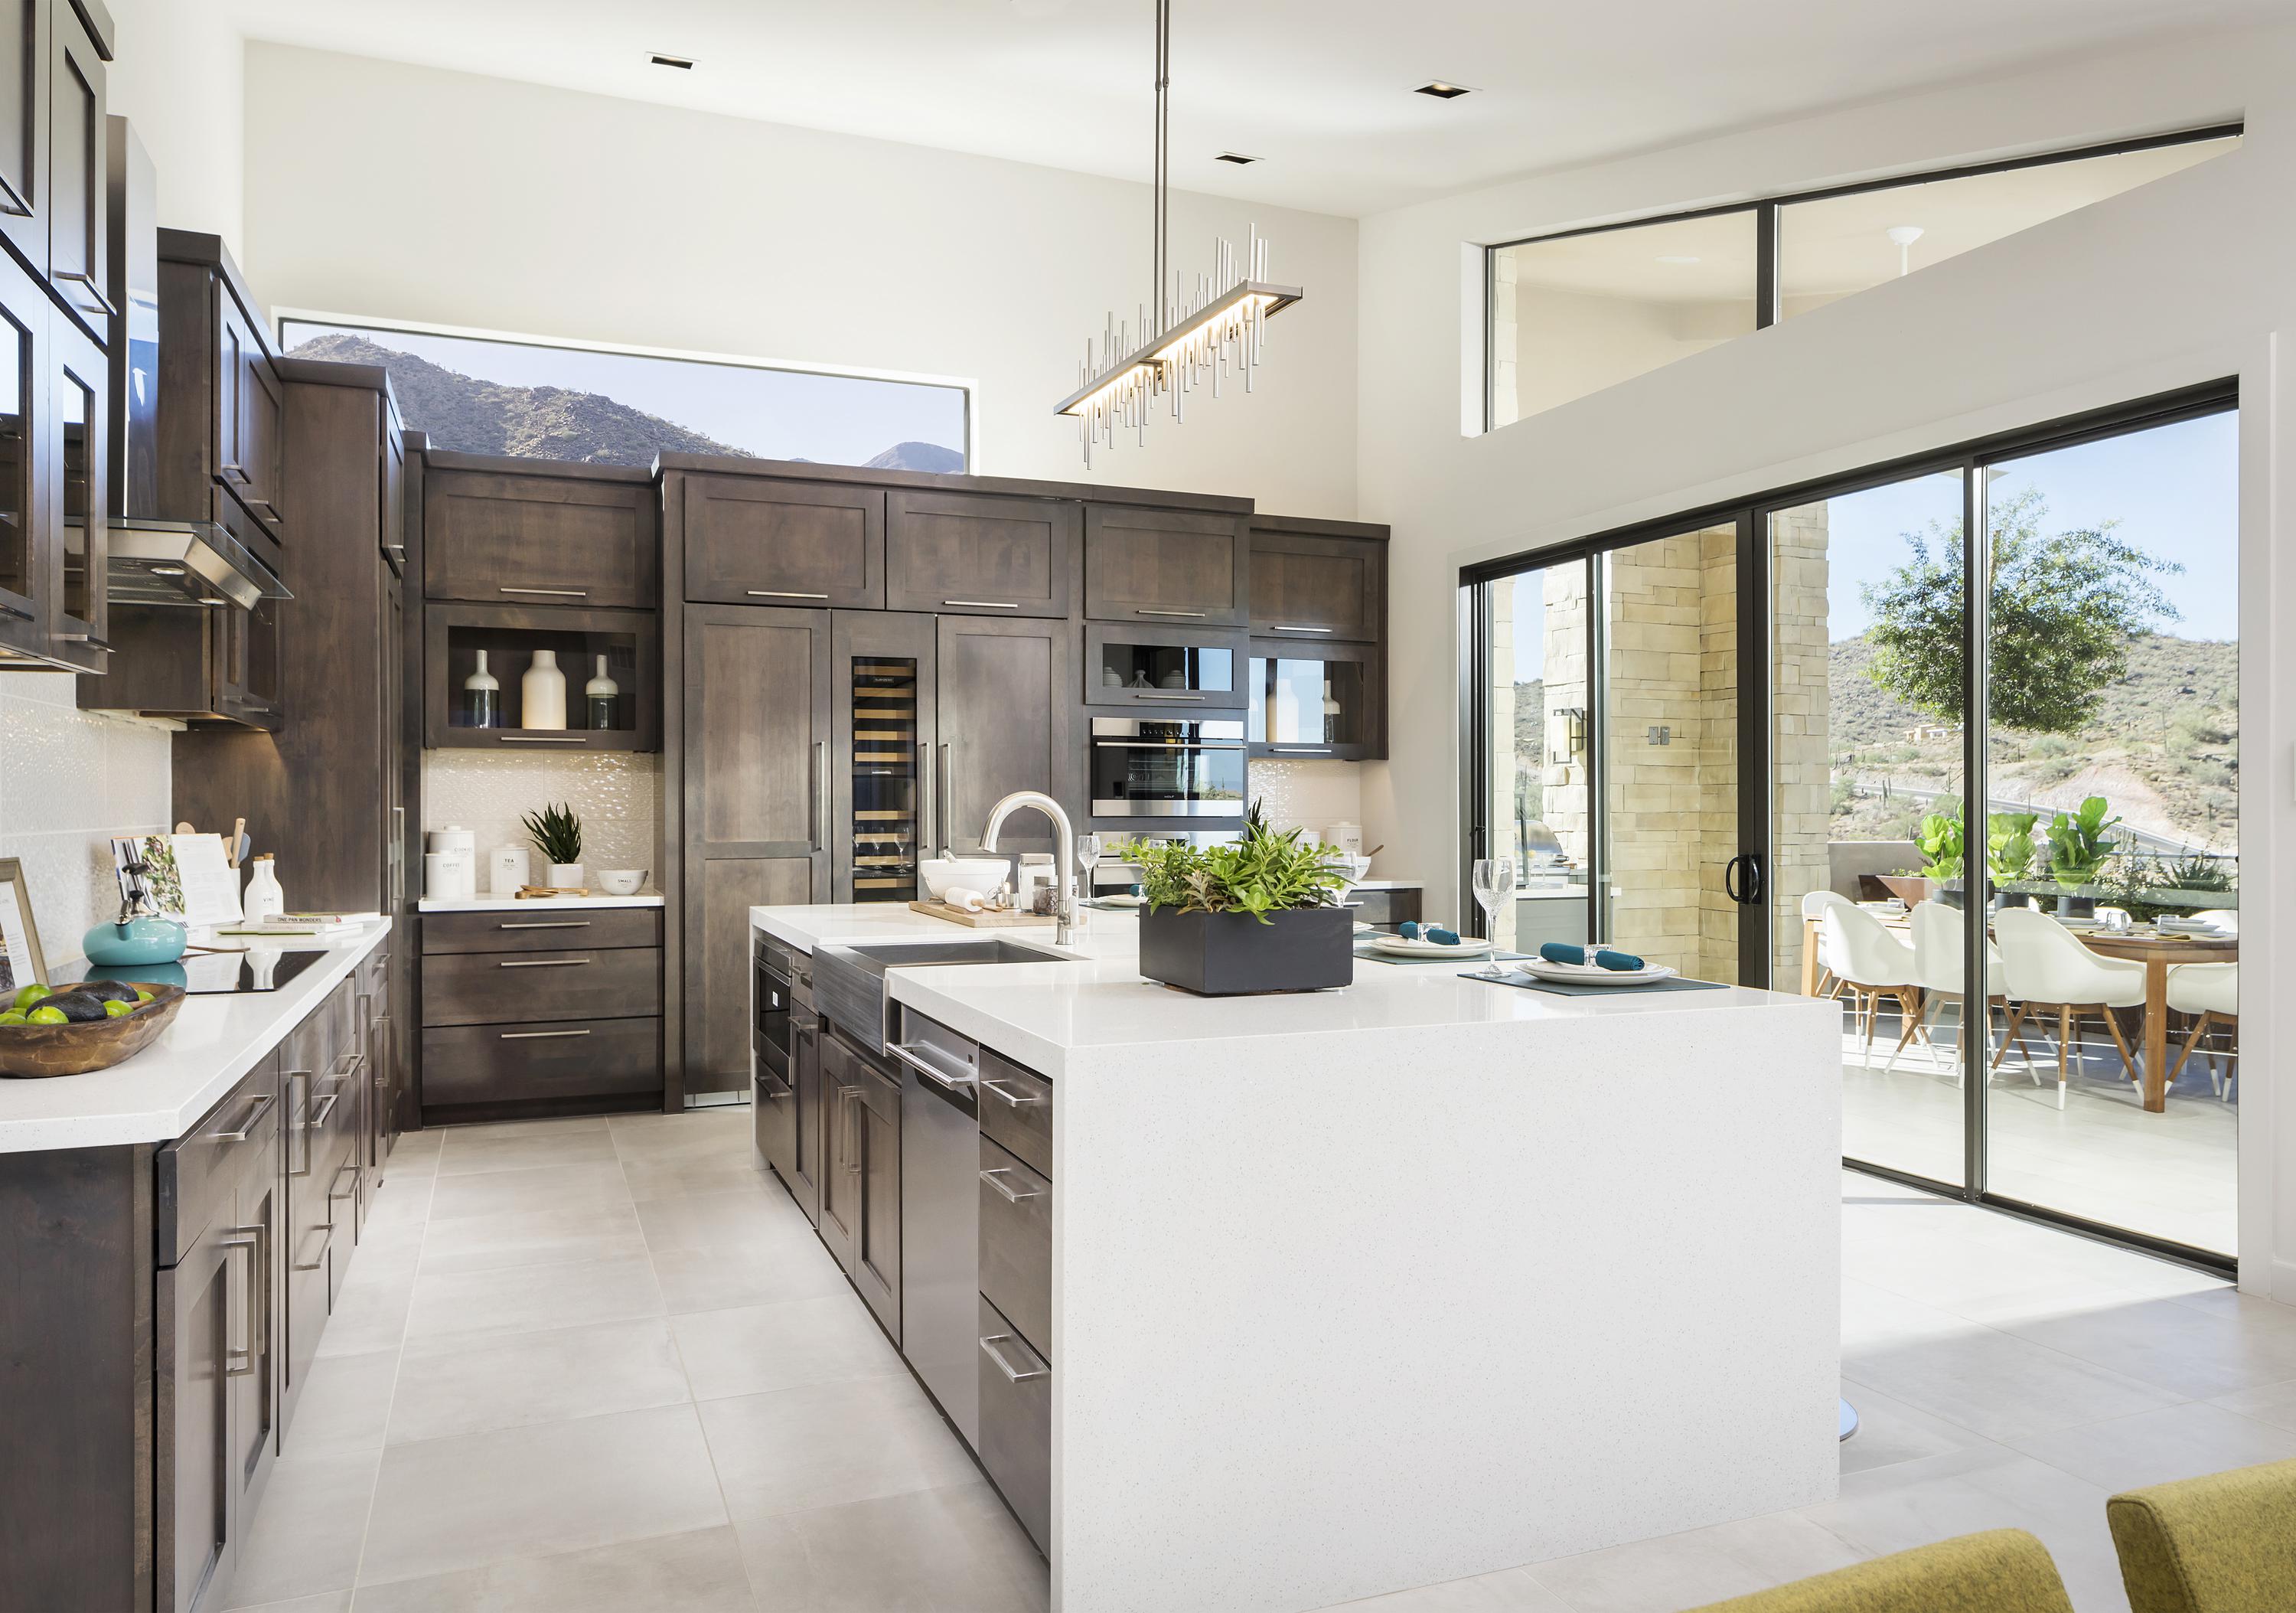 Modern kitchen design with multiple storage options.